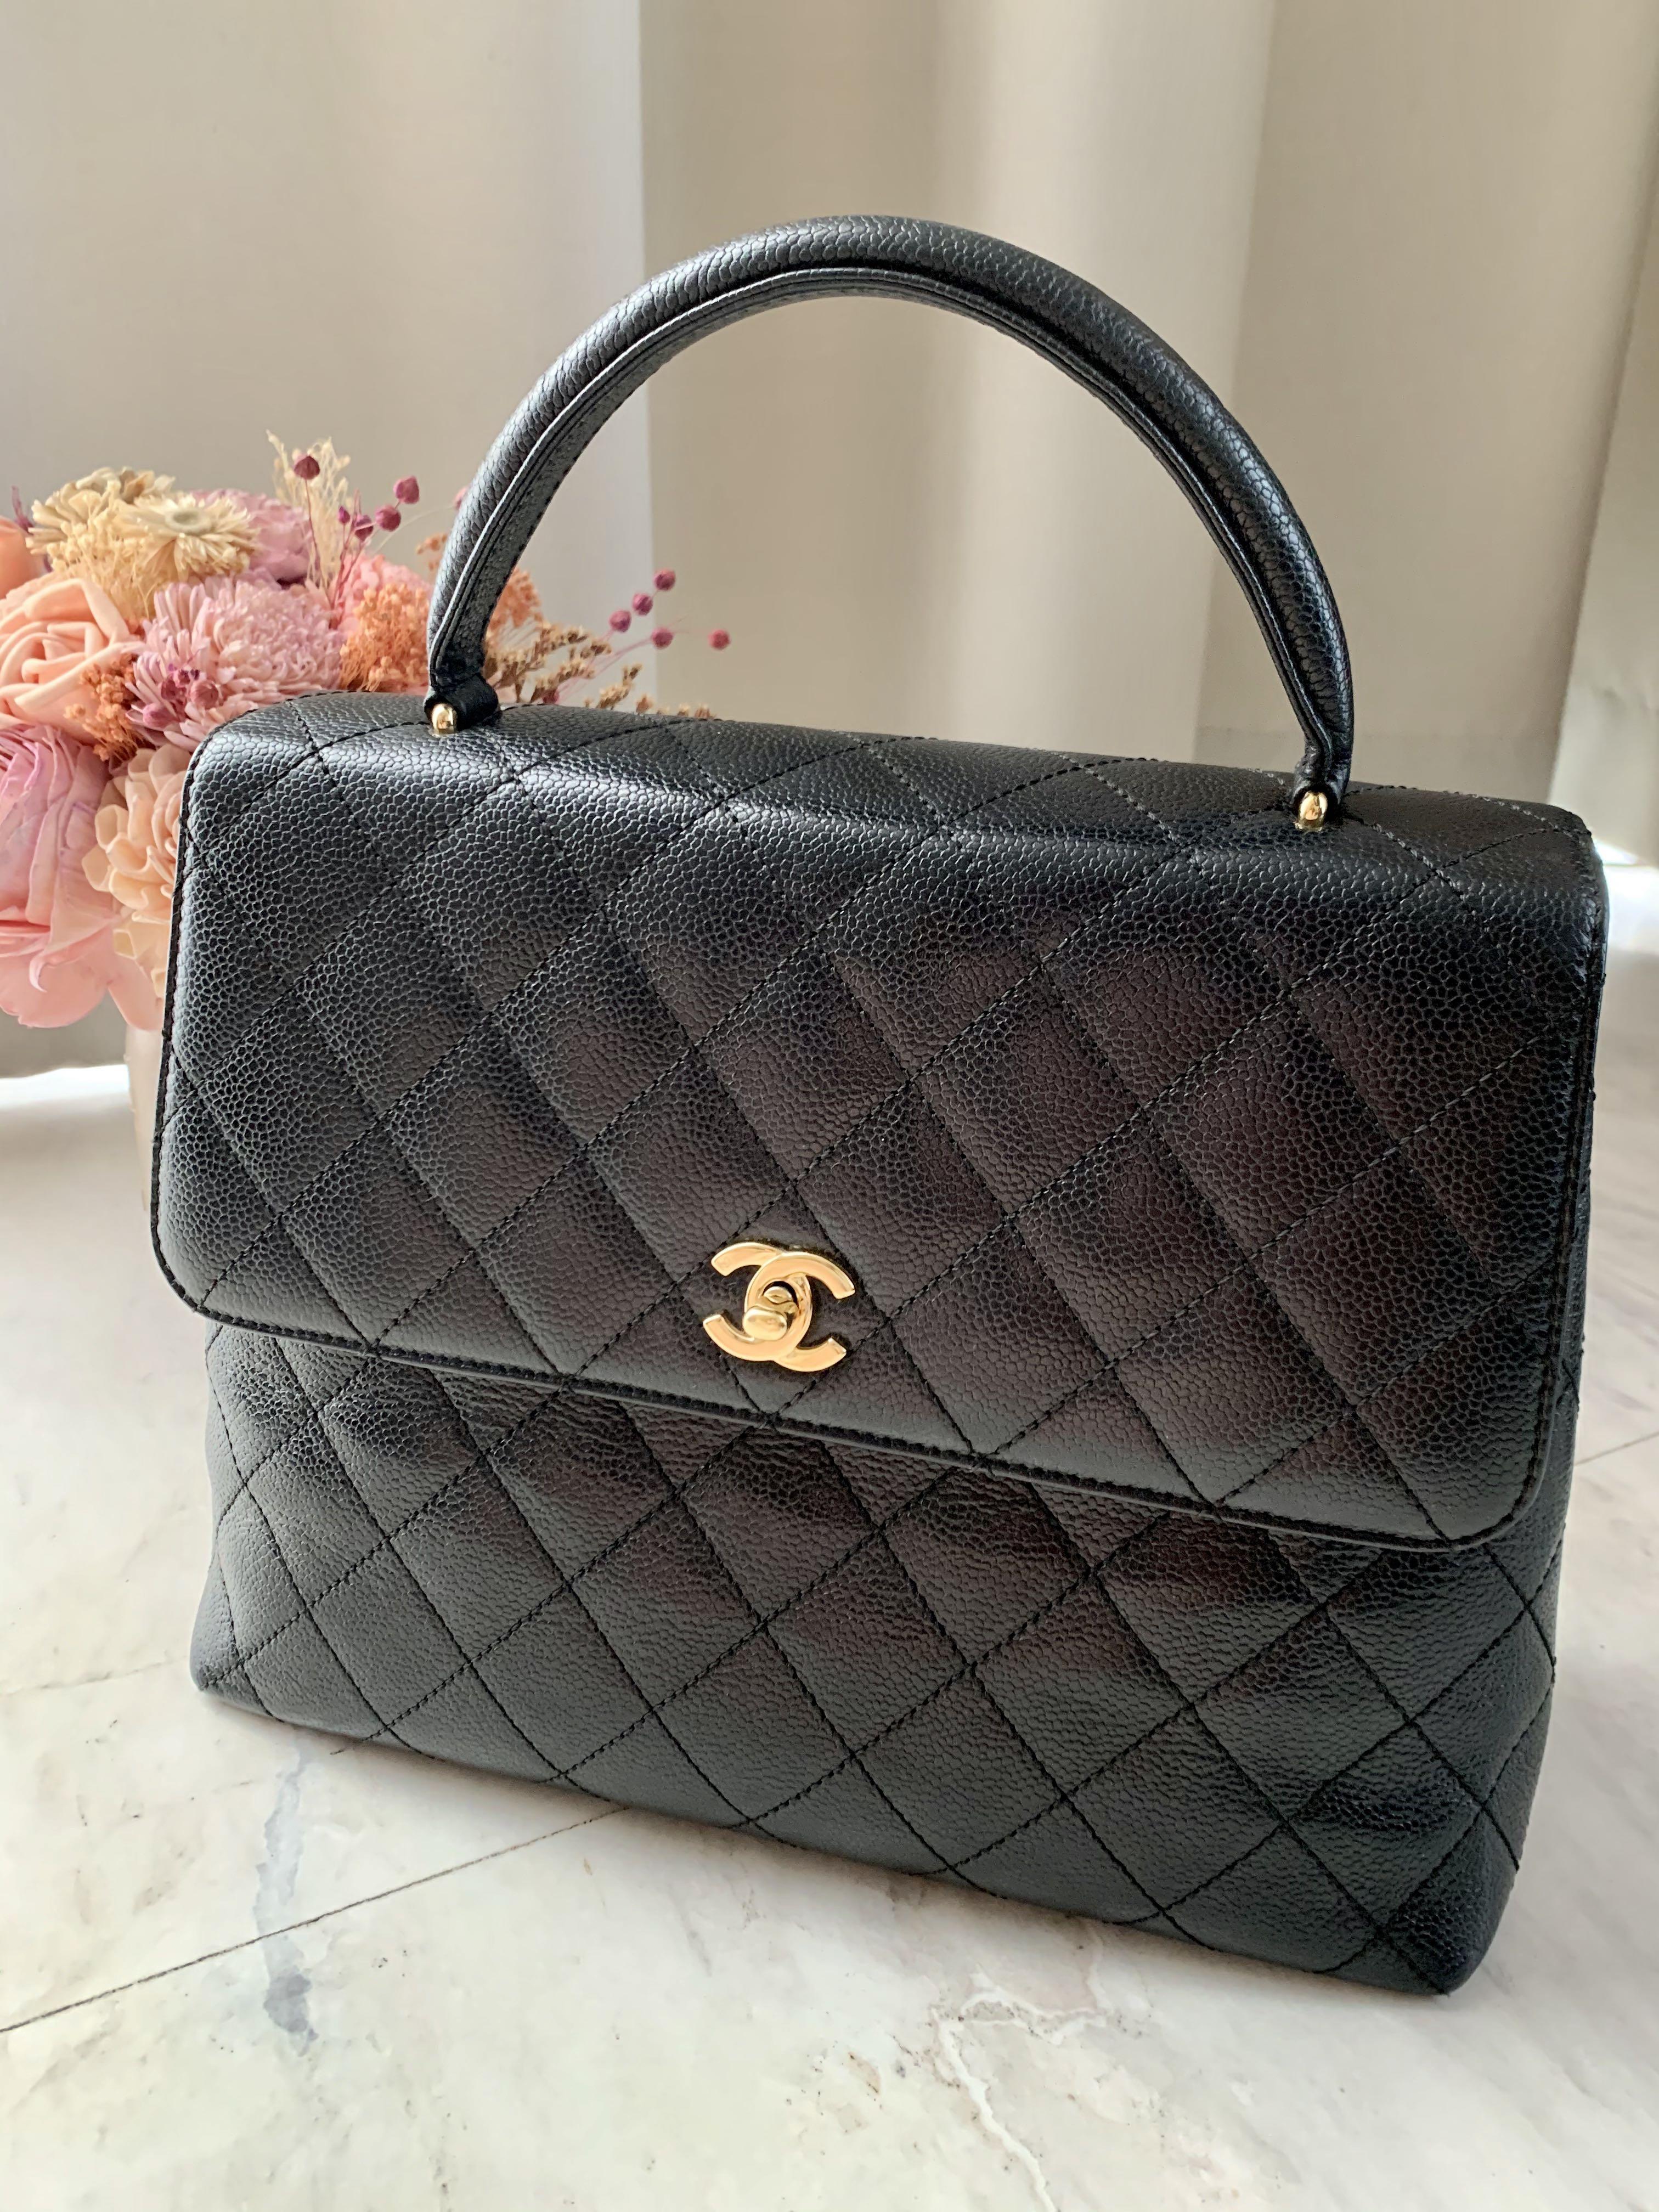 Chanel Classic Handbag Price Europa | semashow.com